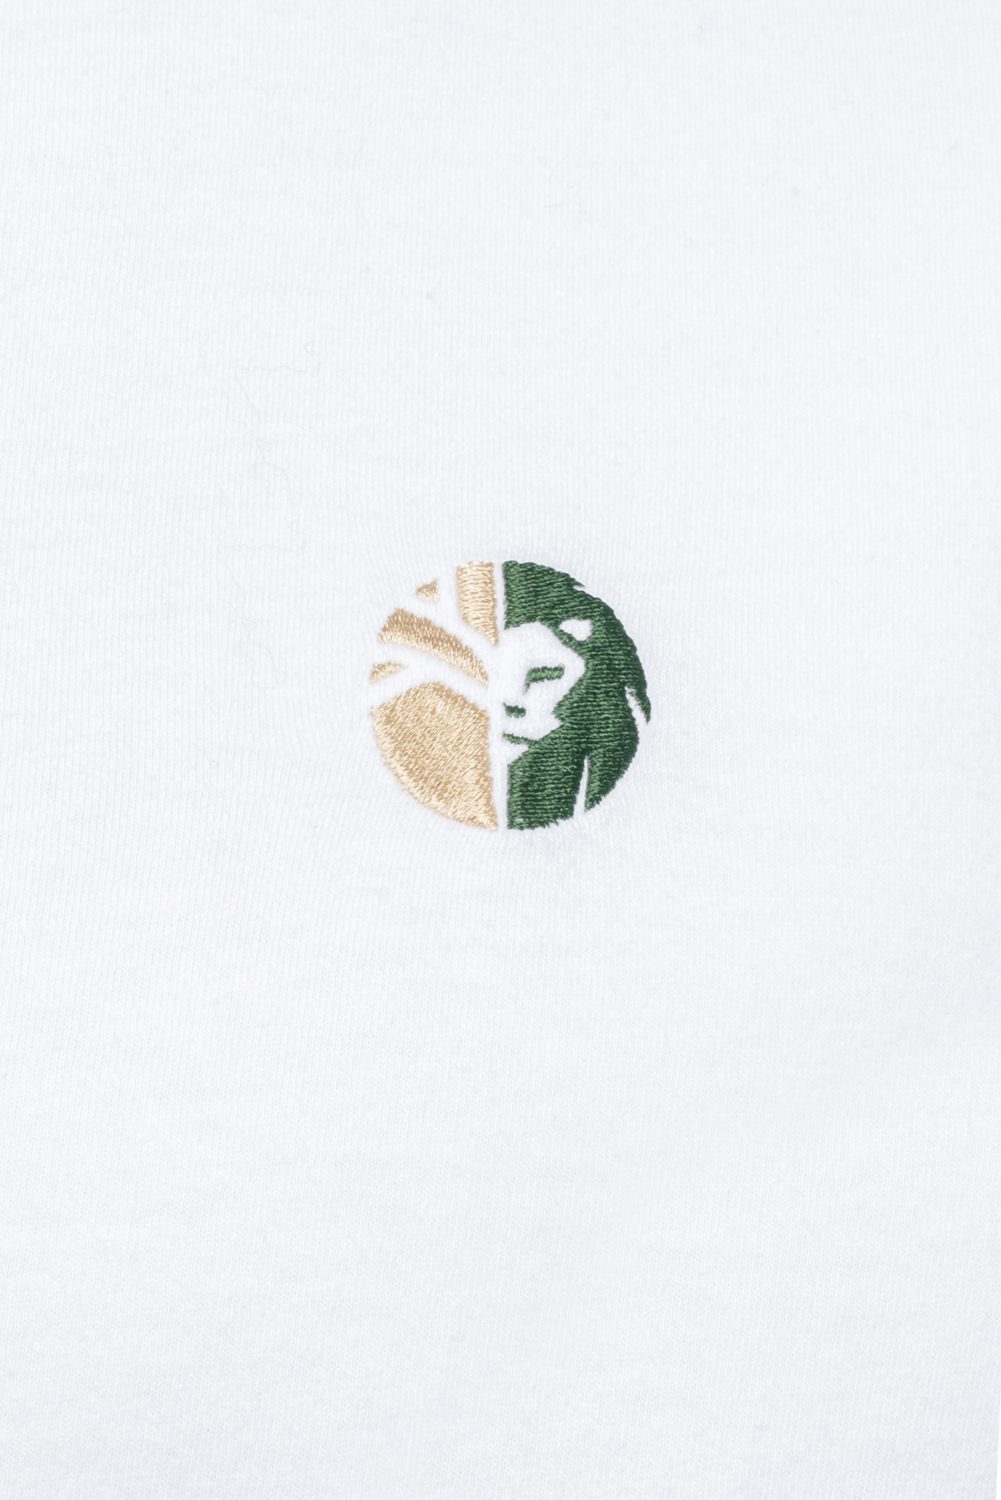 Kilimanjaro Blanc - T-shirt manches longues 100% Coton BIO